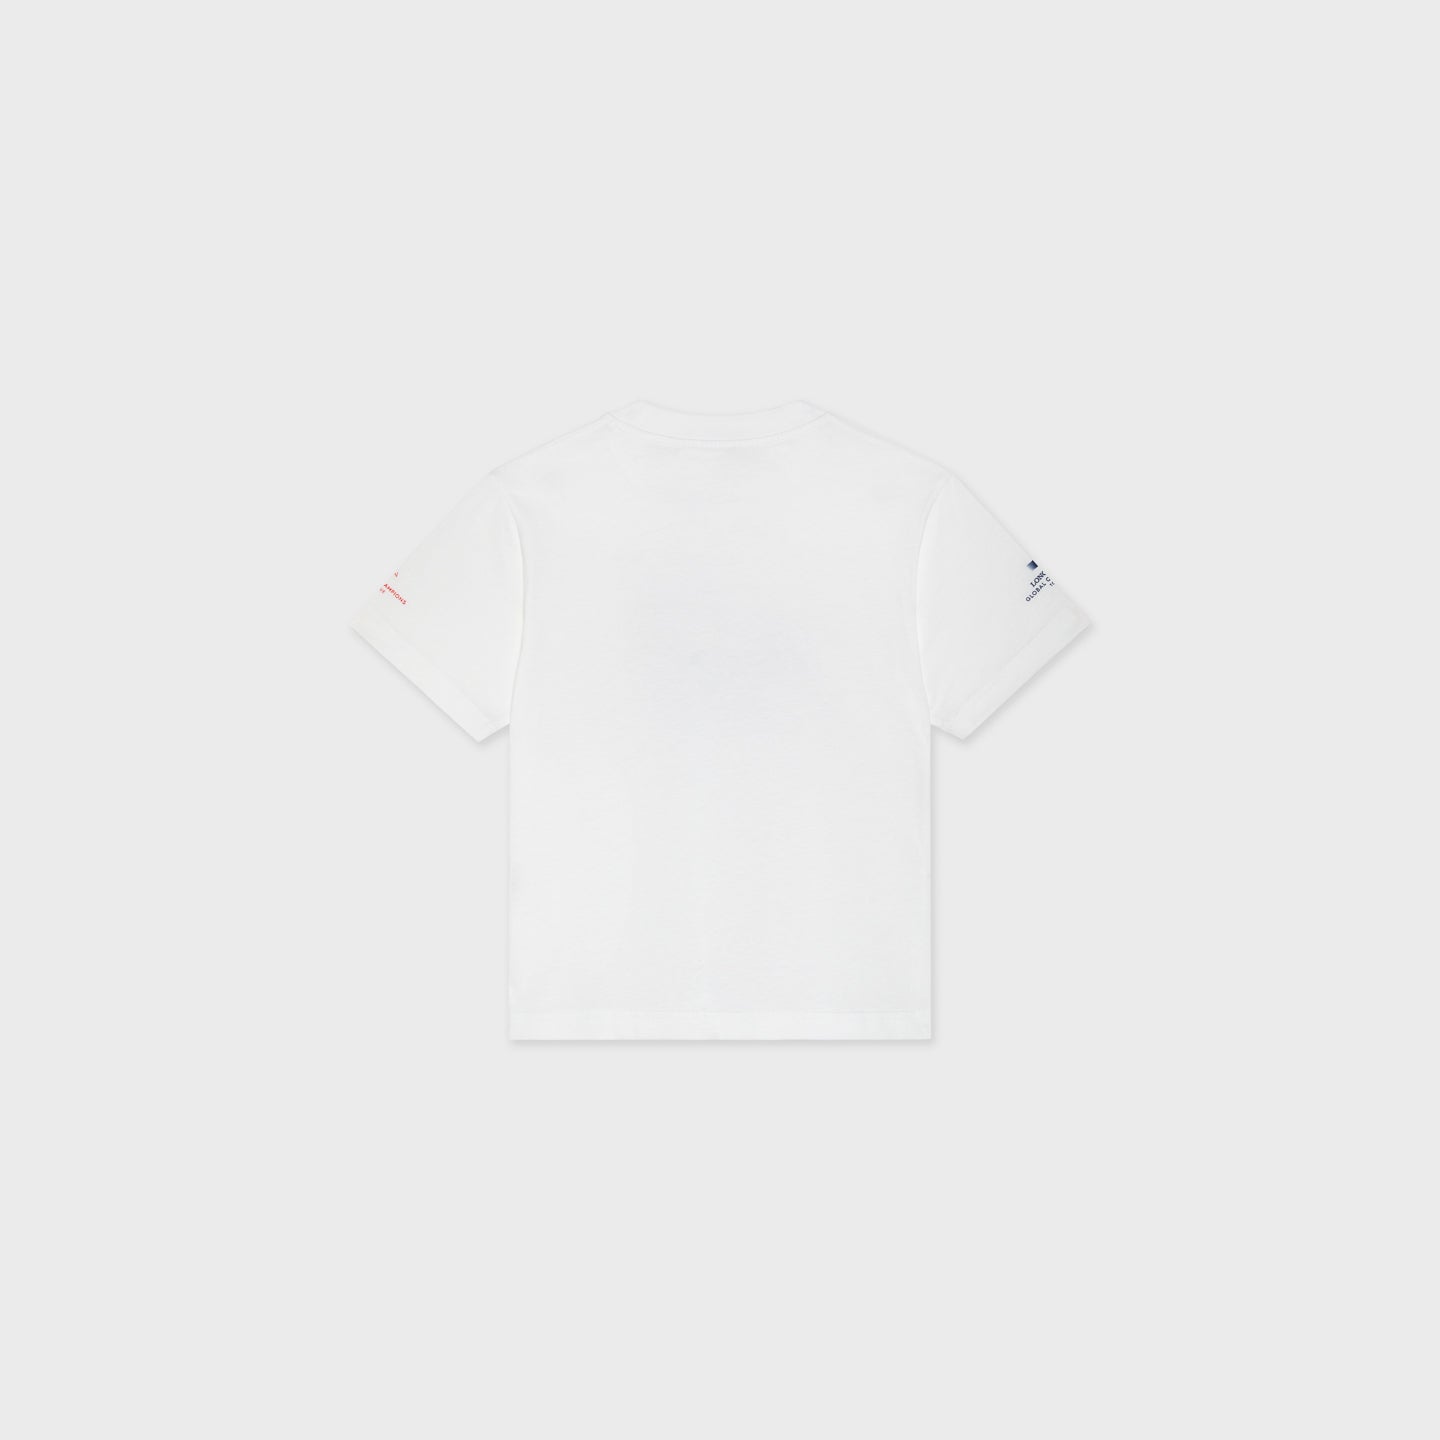 LGCT/GCL Sammy & Paco #1 Kids T-Shirt/White + GIFT STICKER